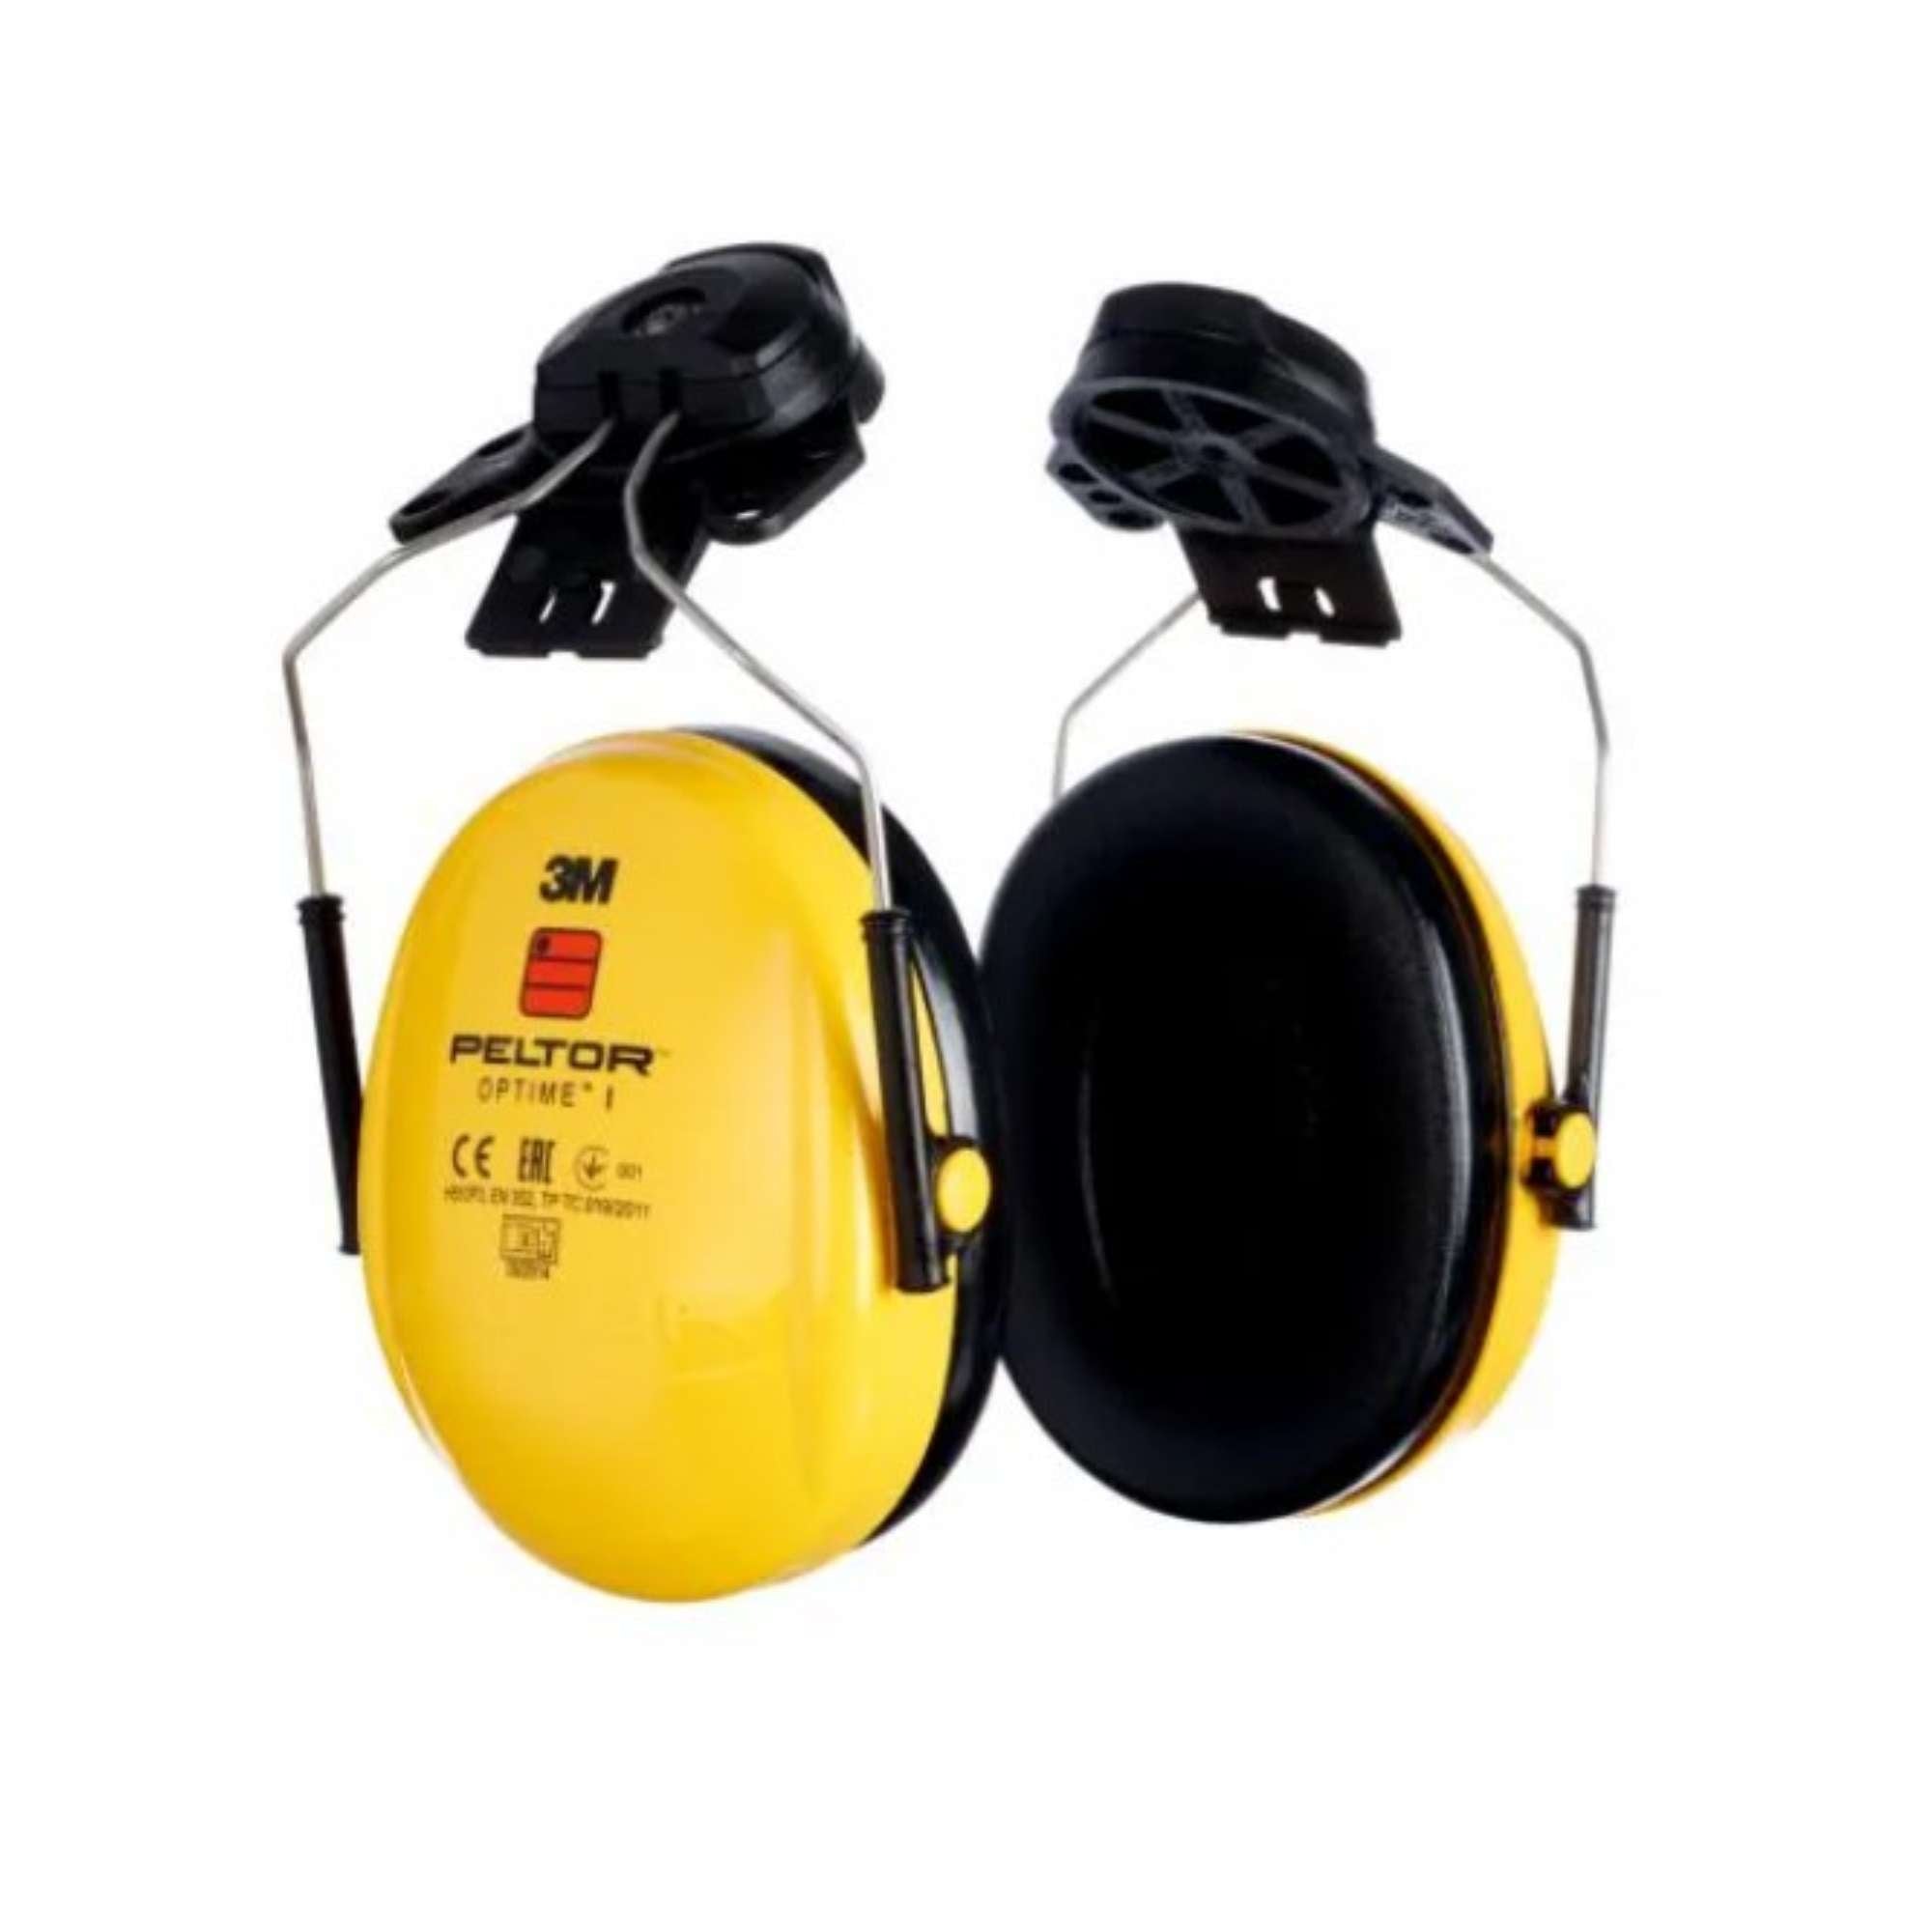 Optime I Helmet Mount Headphones - 3M 7000039617